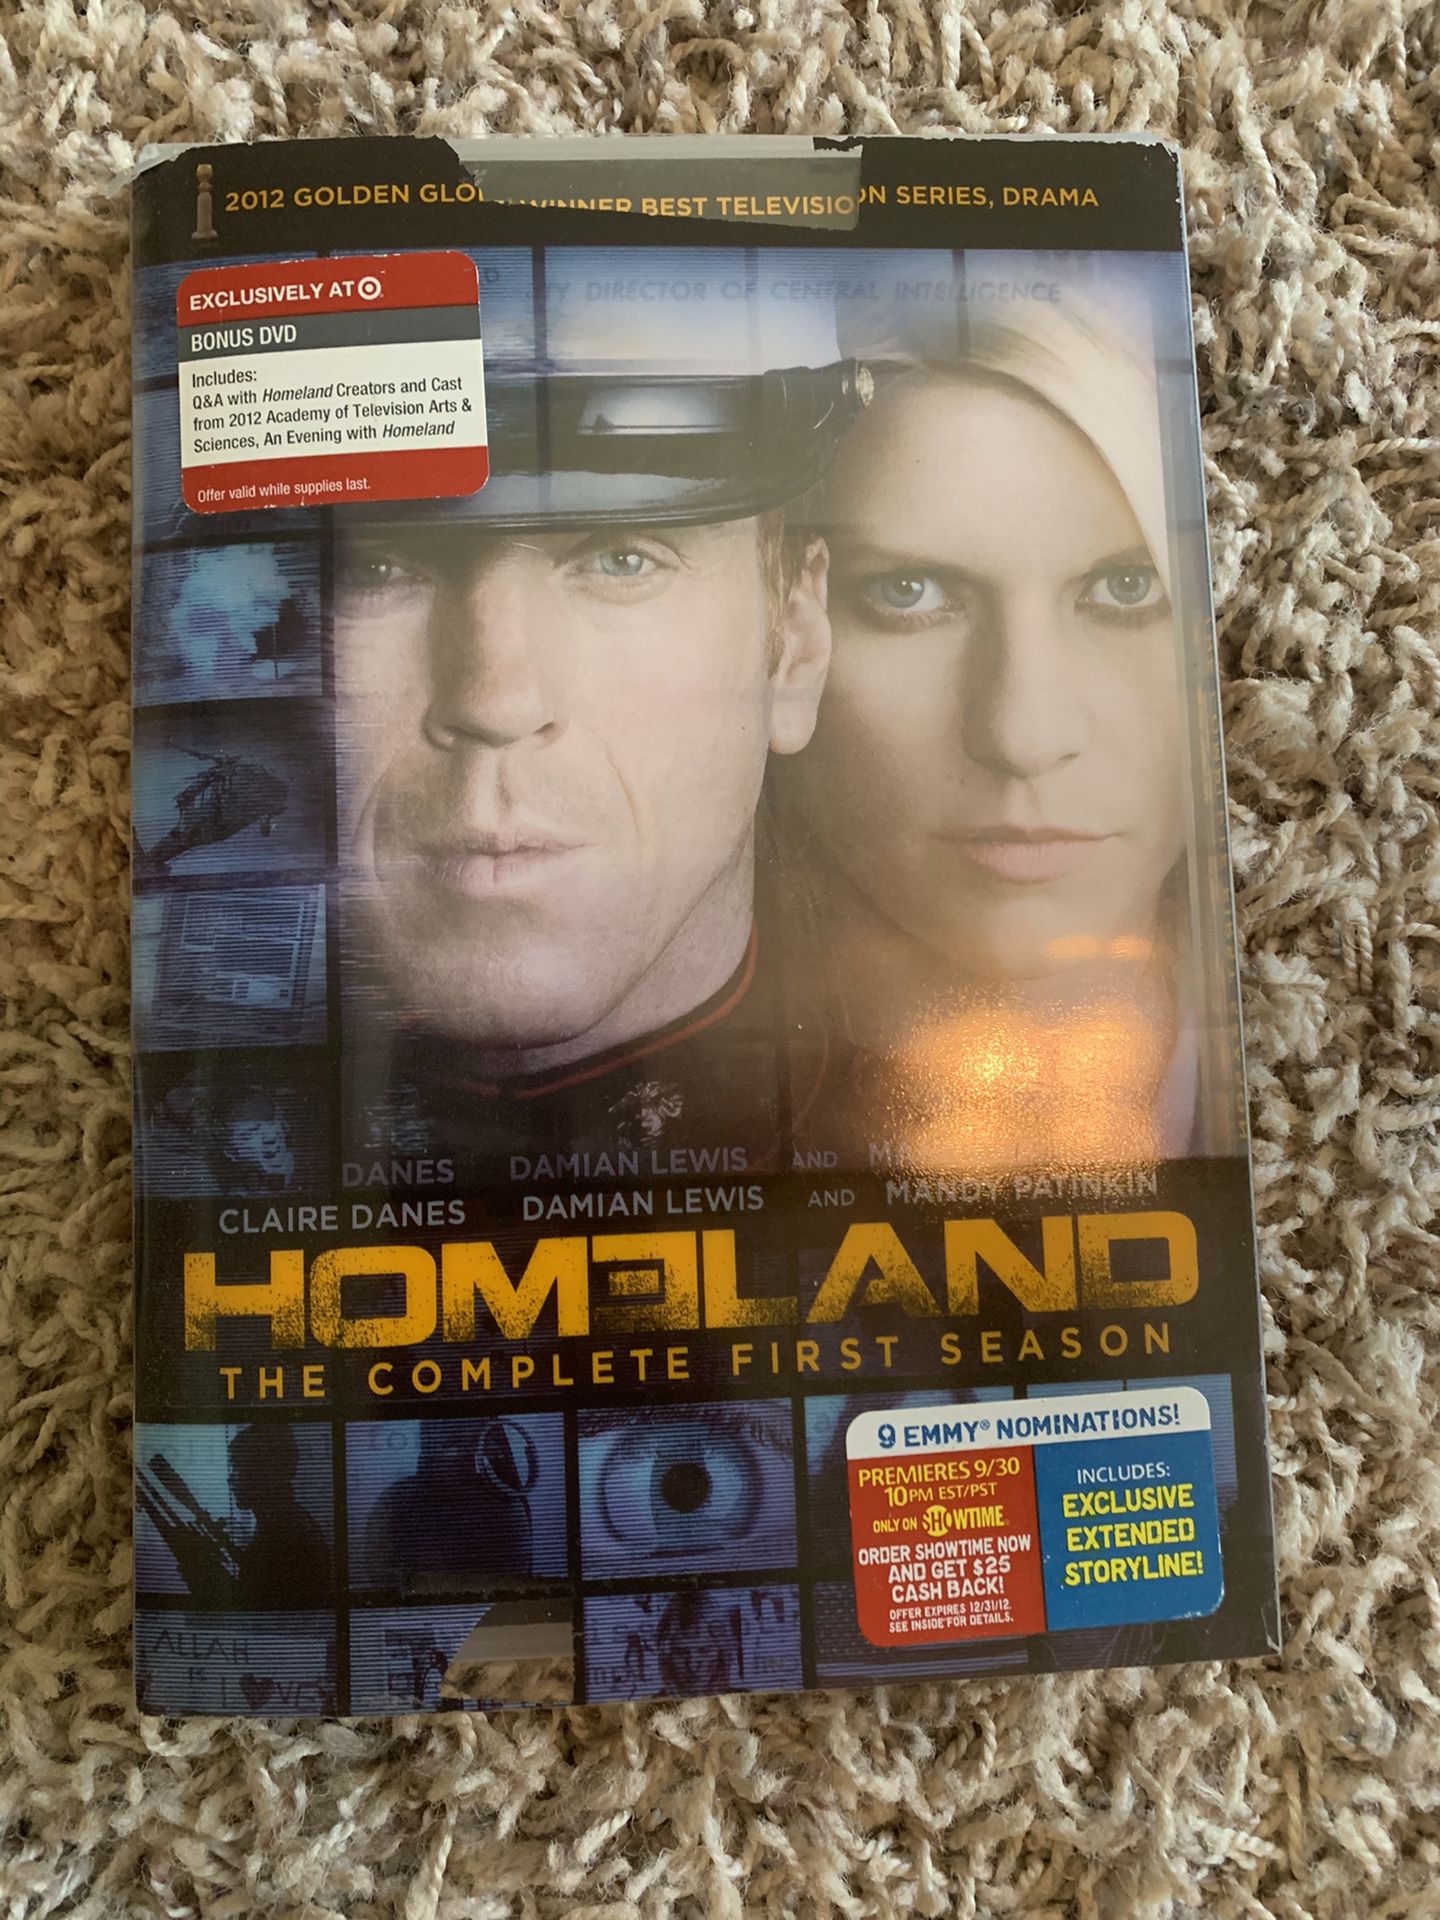 Homeland season one on DVD